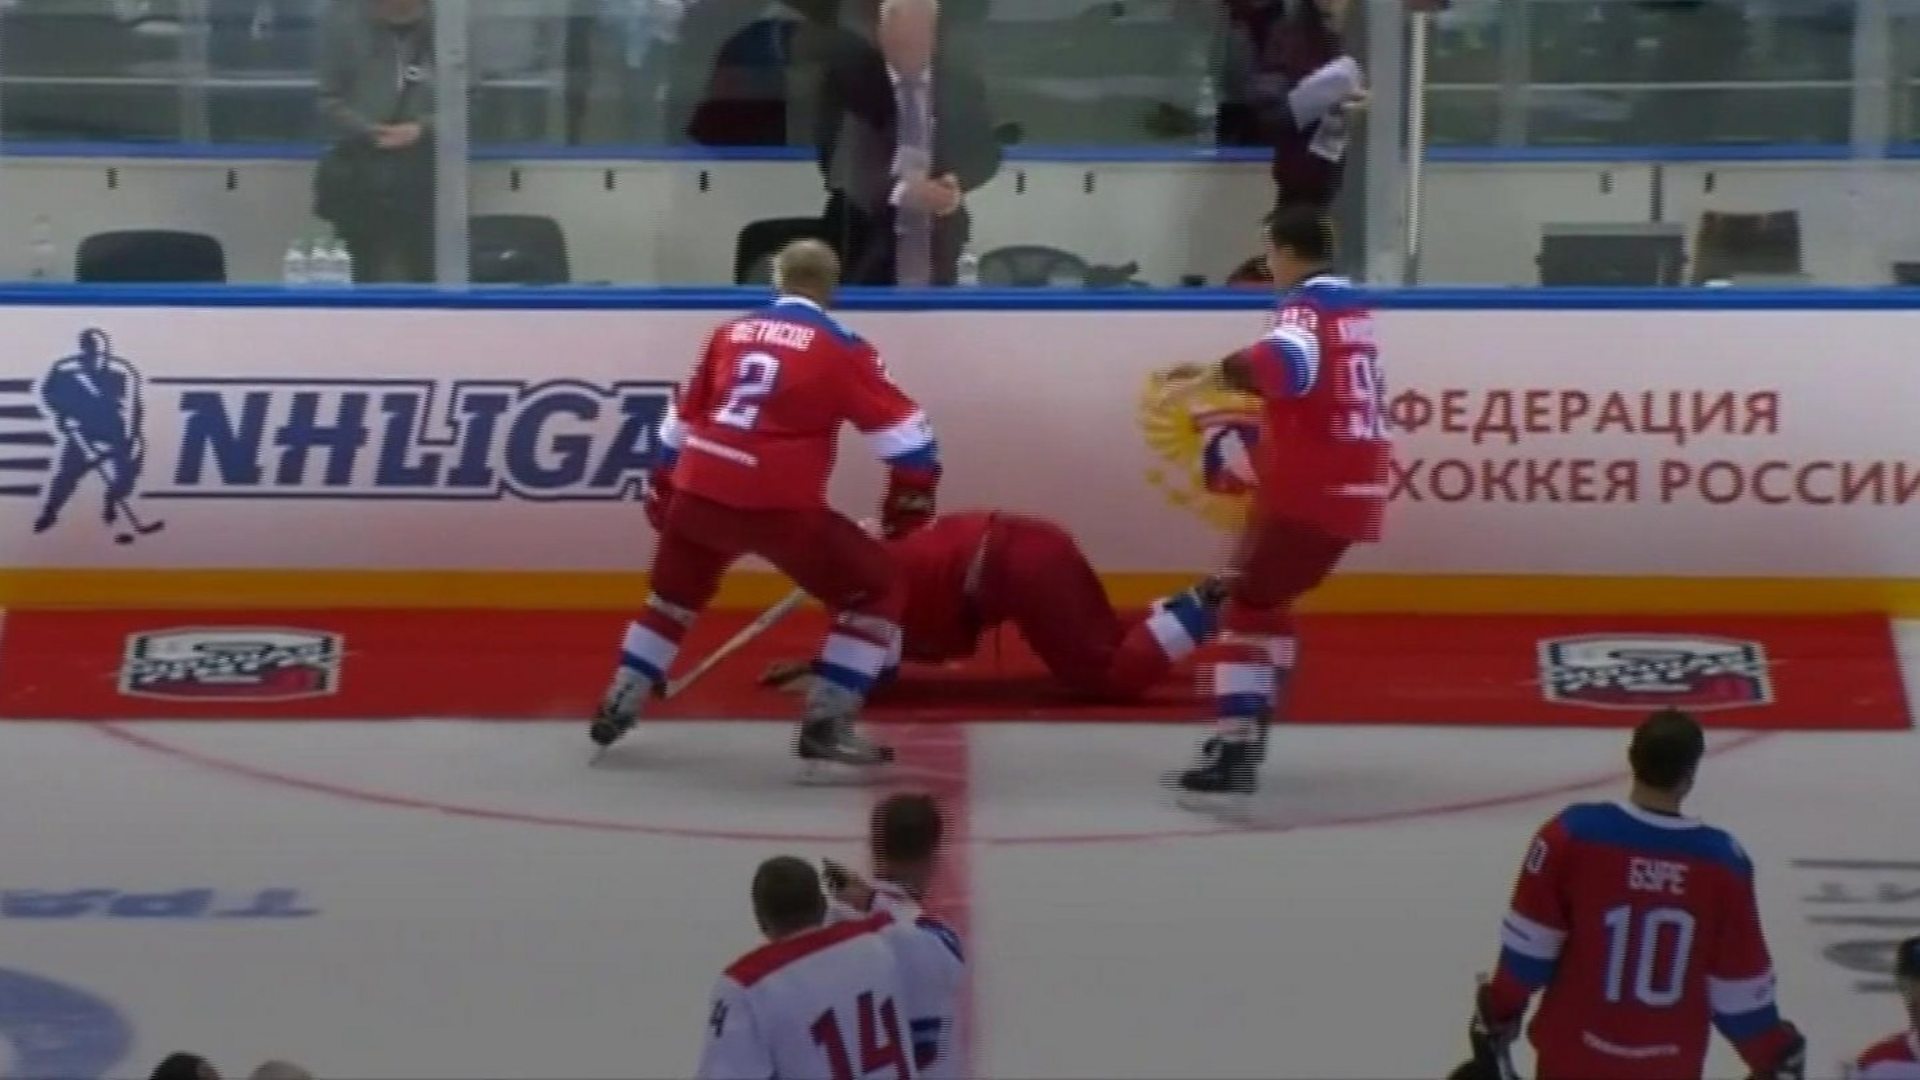 Russia's President Putin falls on ice after hockey match - BBC News